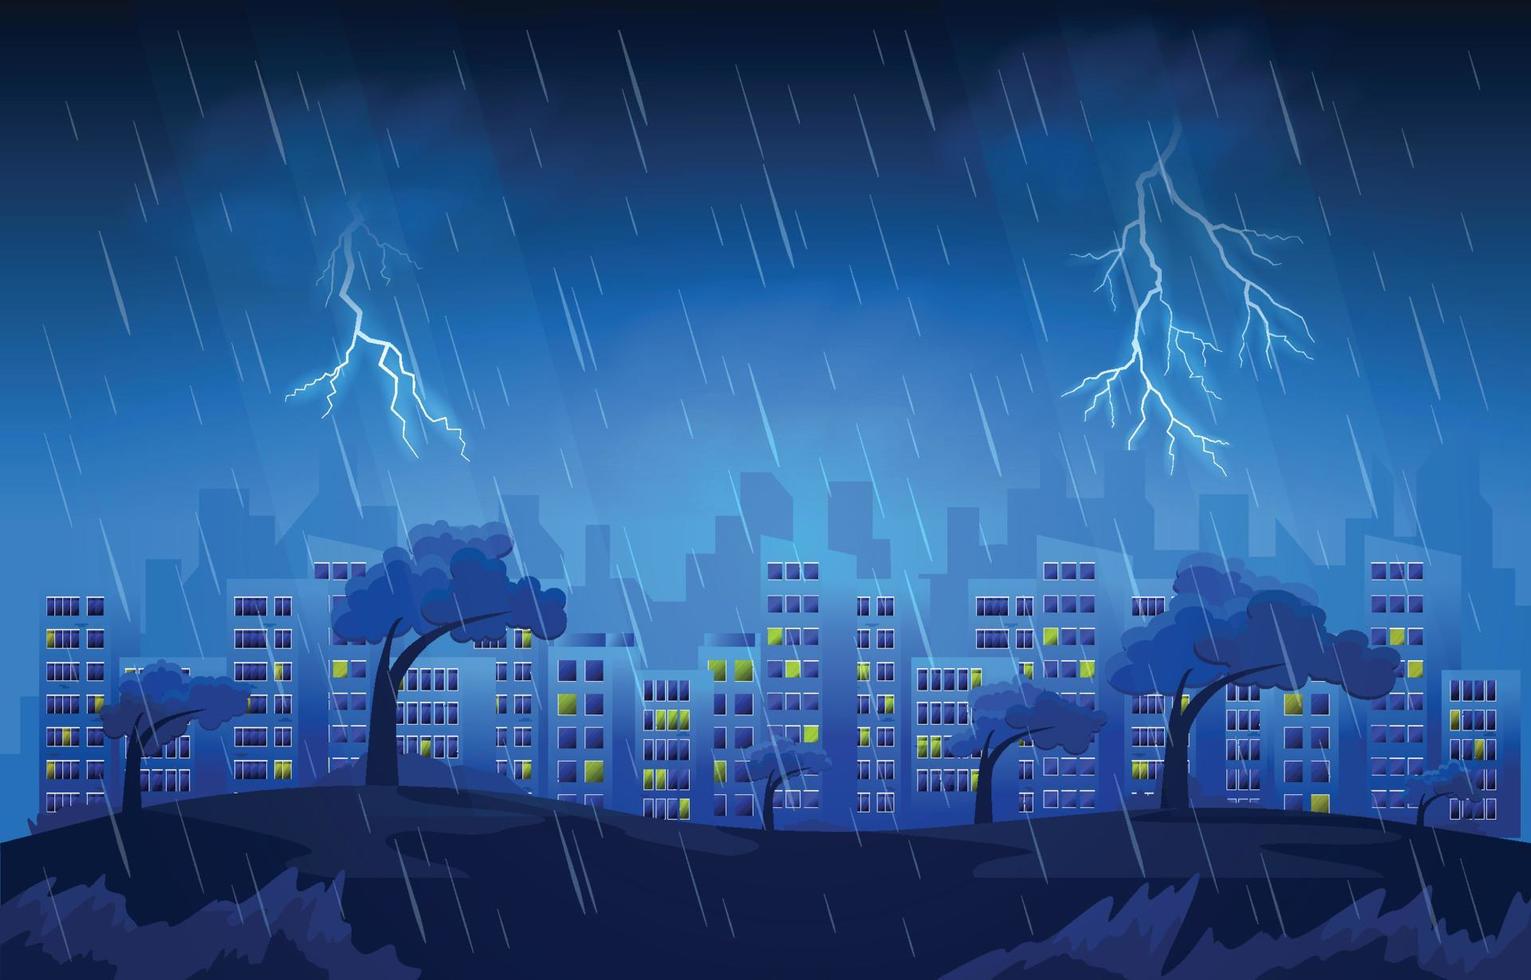 Thunder Storm Lightning Strike Heavy Rain City Building Skyline Cityscape Illustration vector